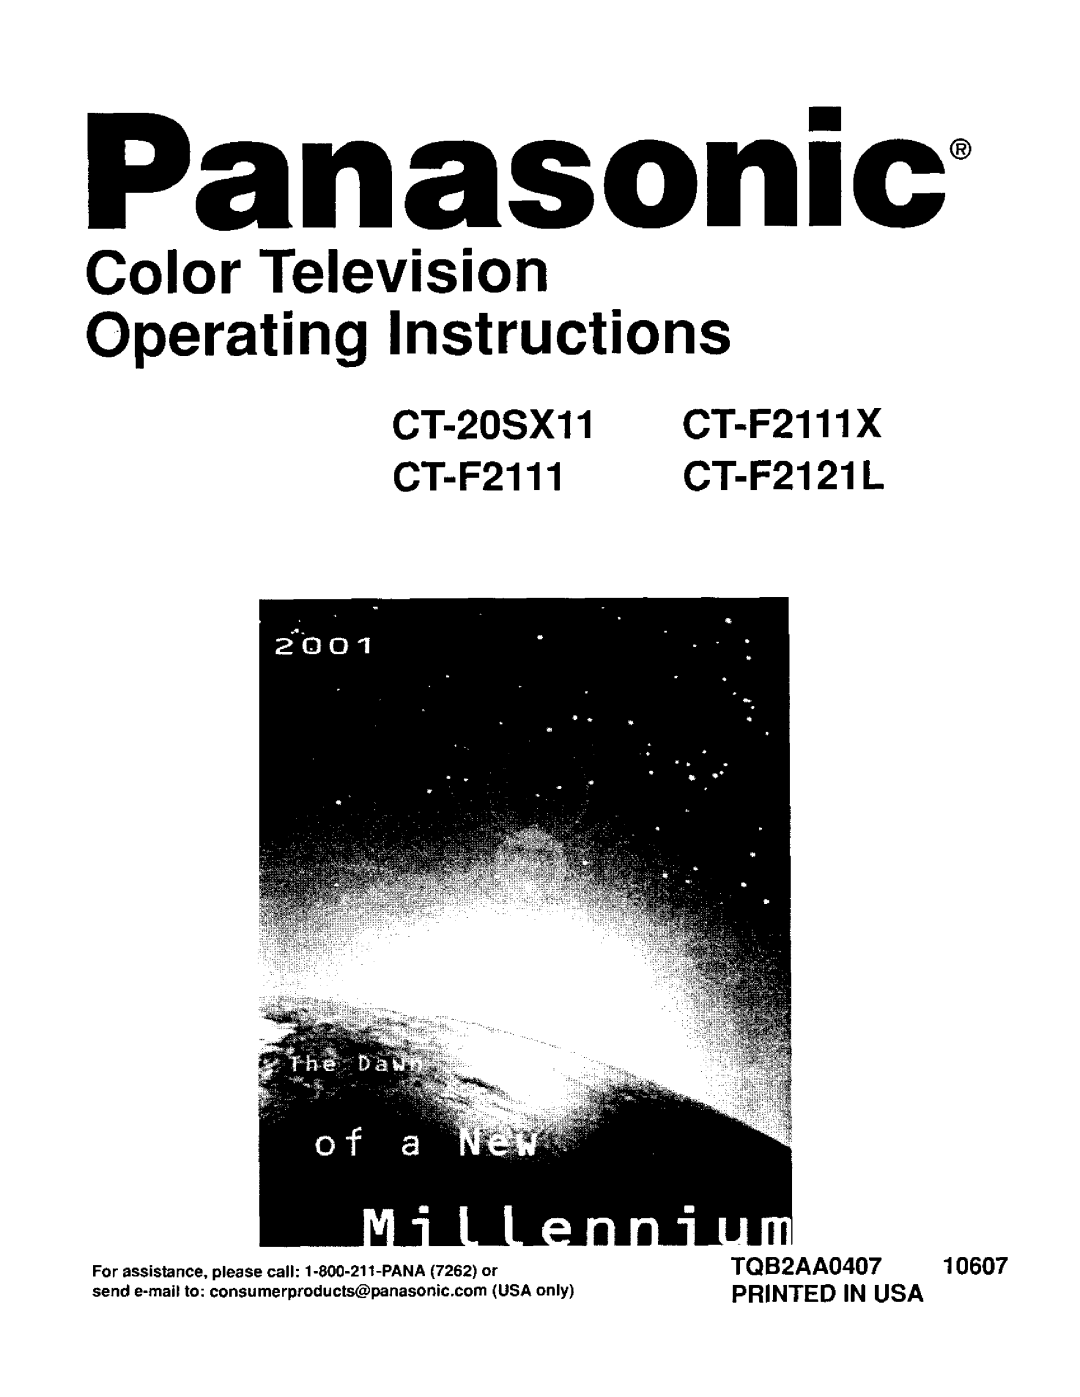 Panasonic CT-F2121L, CT-F2111X manual TQB2AA0407 PRINTED IN USA, nasonlc, Color Television Operating Instructions 